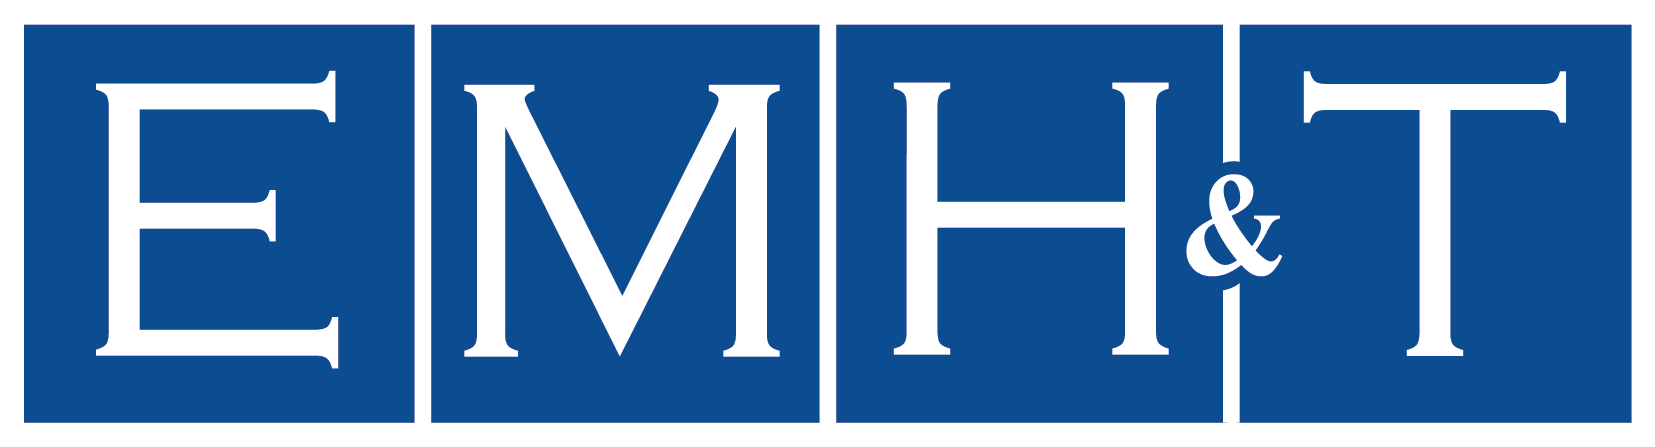 EMH&T logo